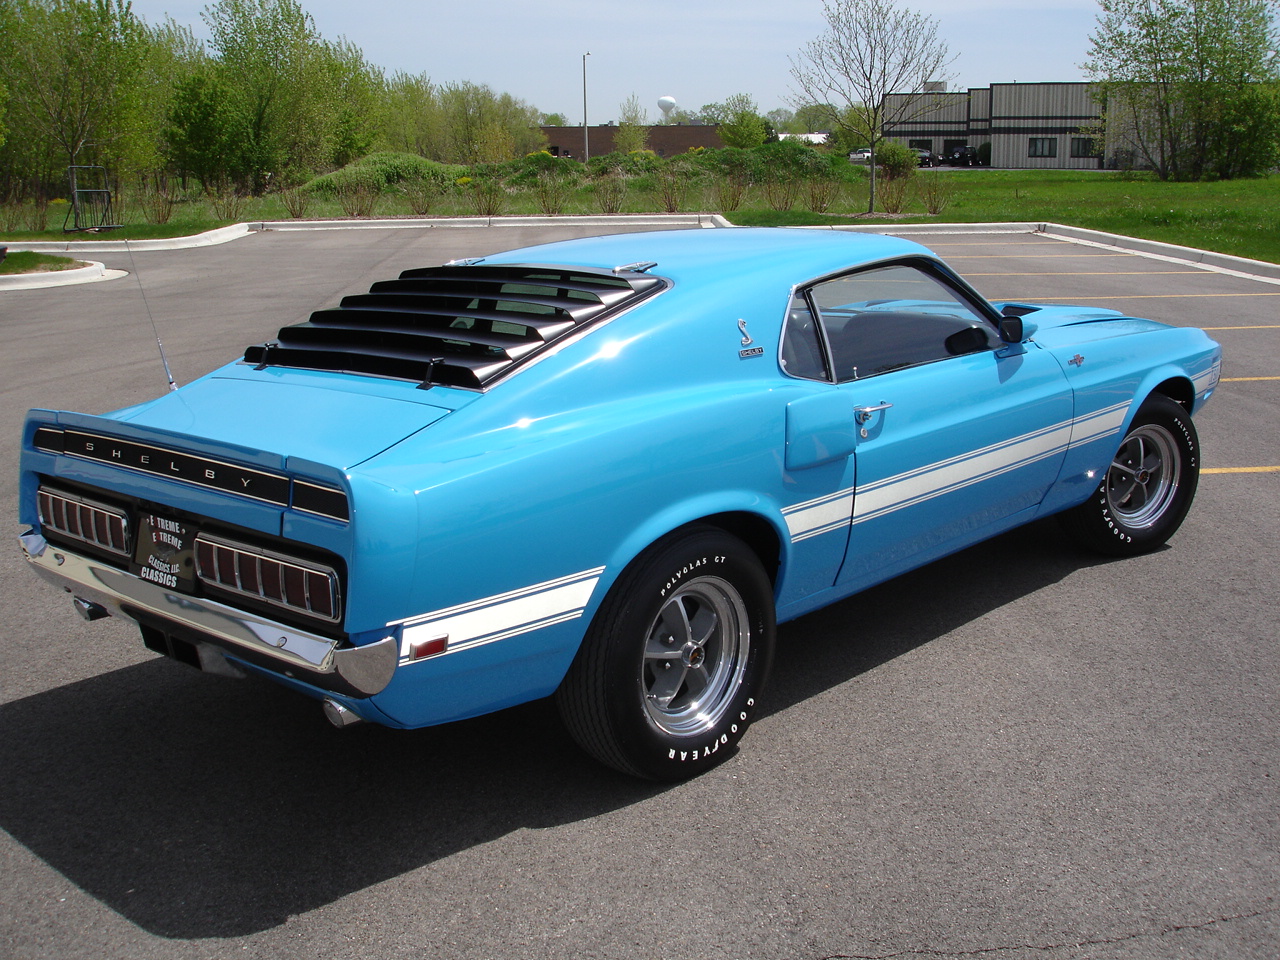 /1969-shelby-gt500-scj-drag-pack-grabber-blue